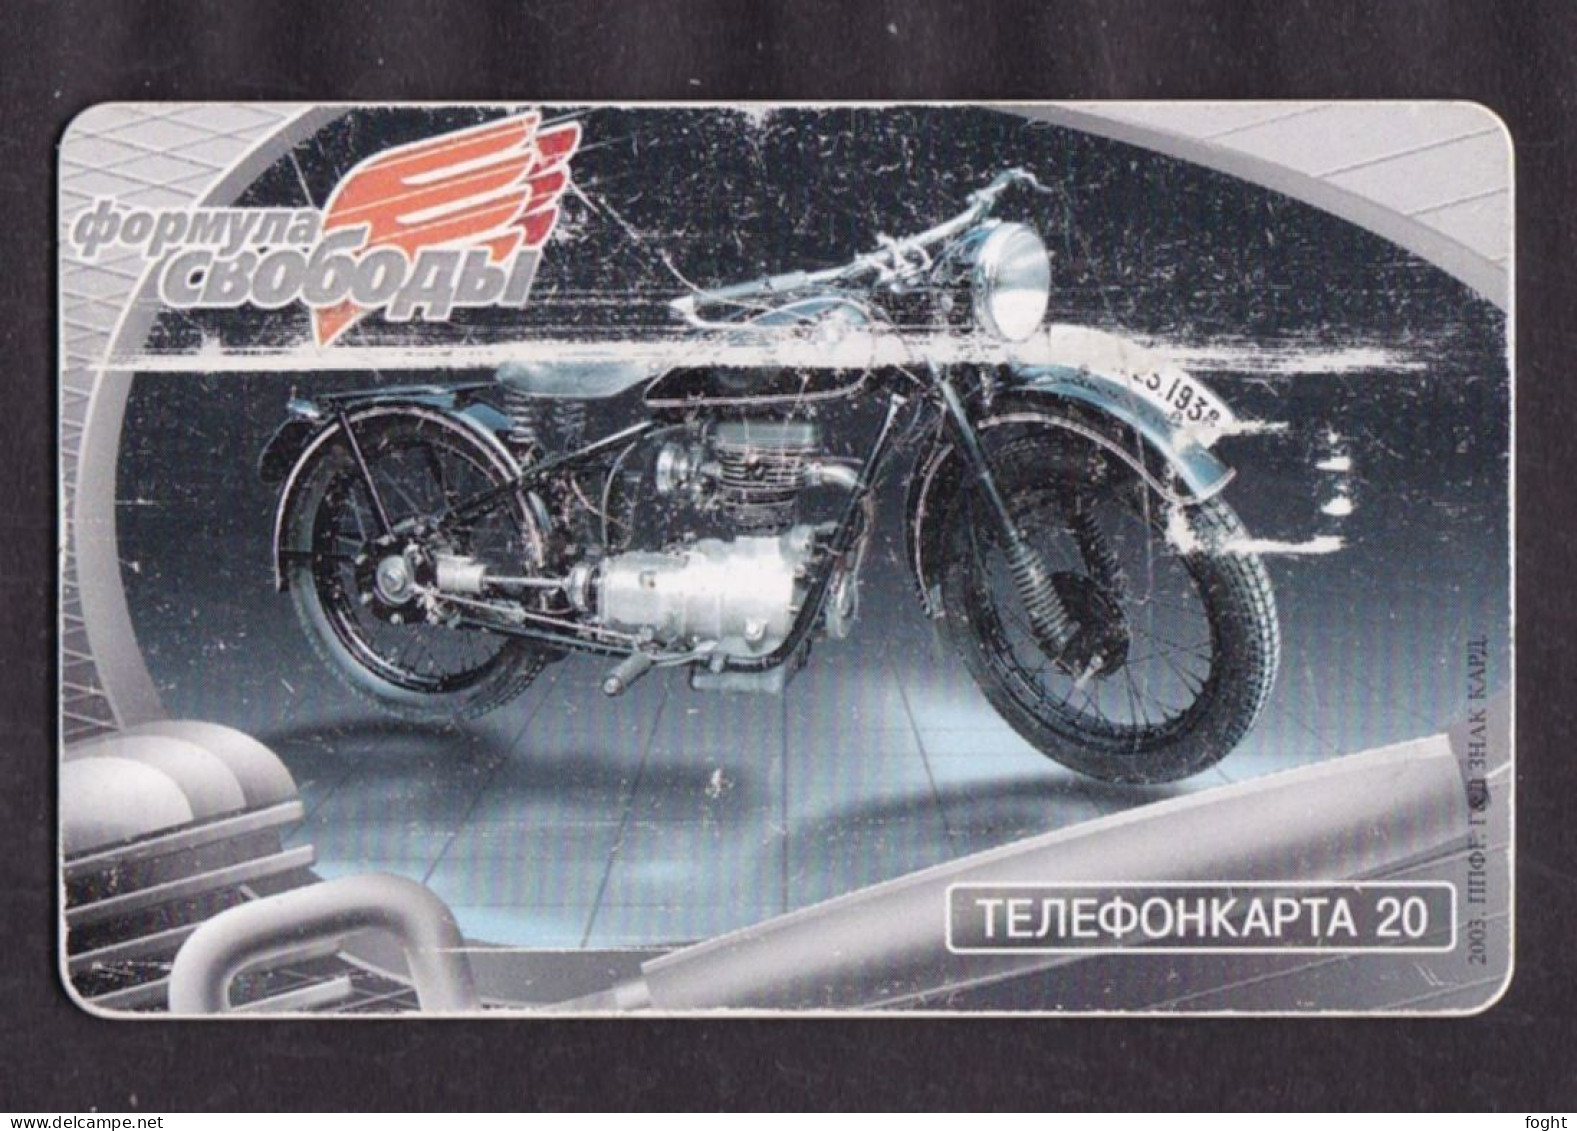 2003 Russia.Phonecard › Formula Of Freedom. 1938g.  ,20 Units,Col:RU-MG-TS-0397 - Russia